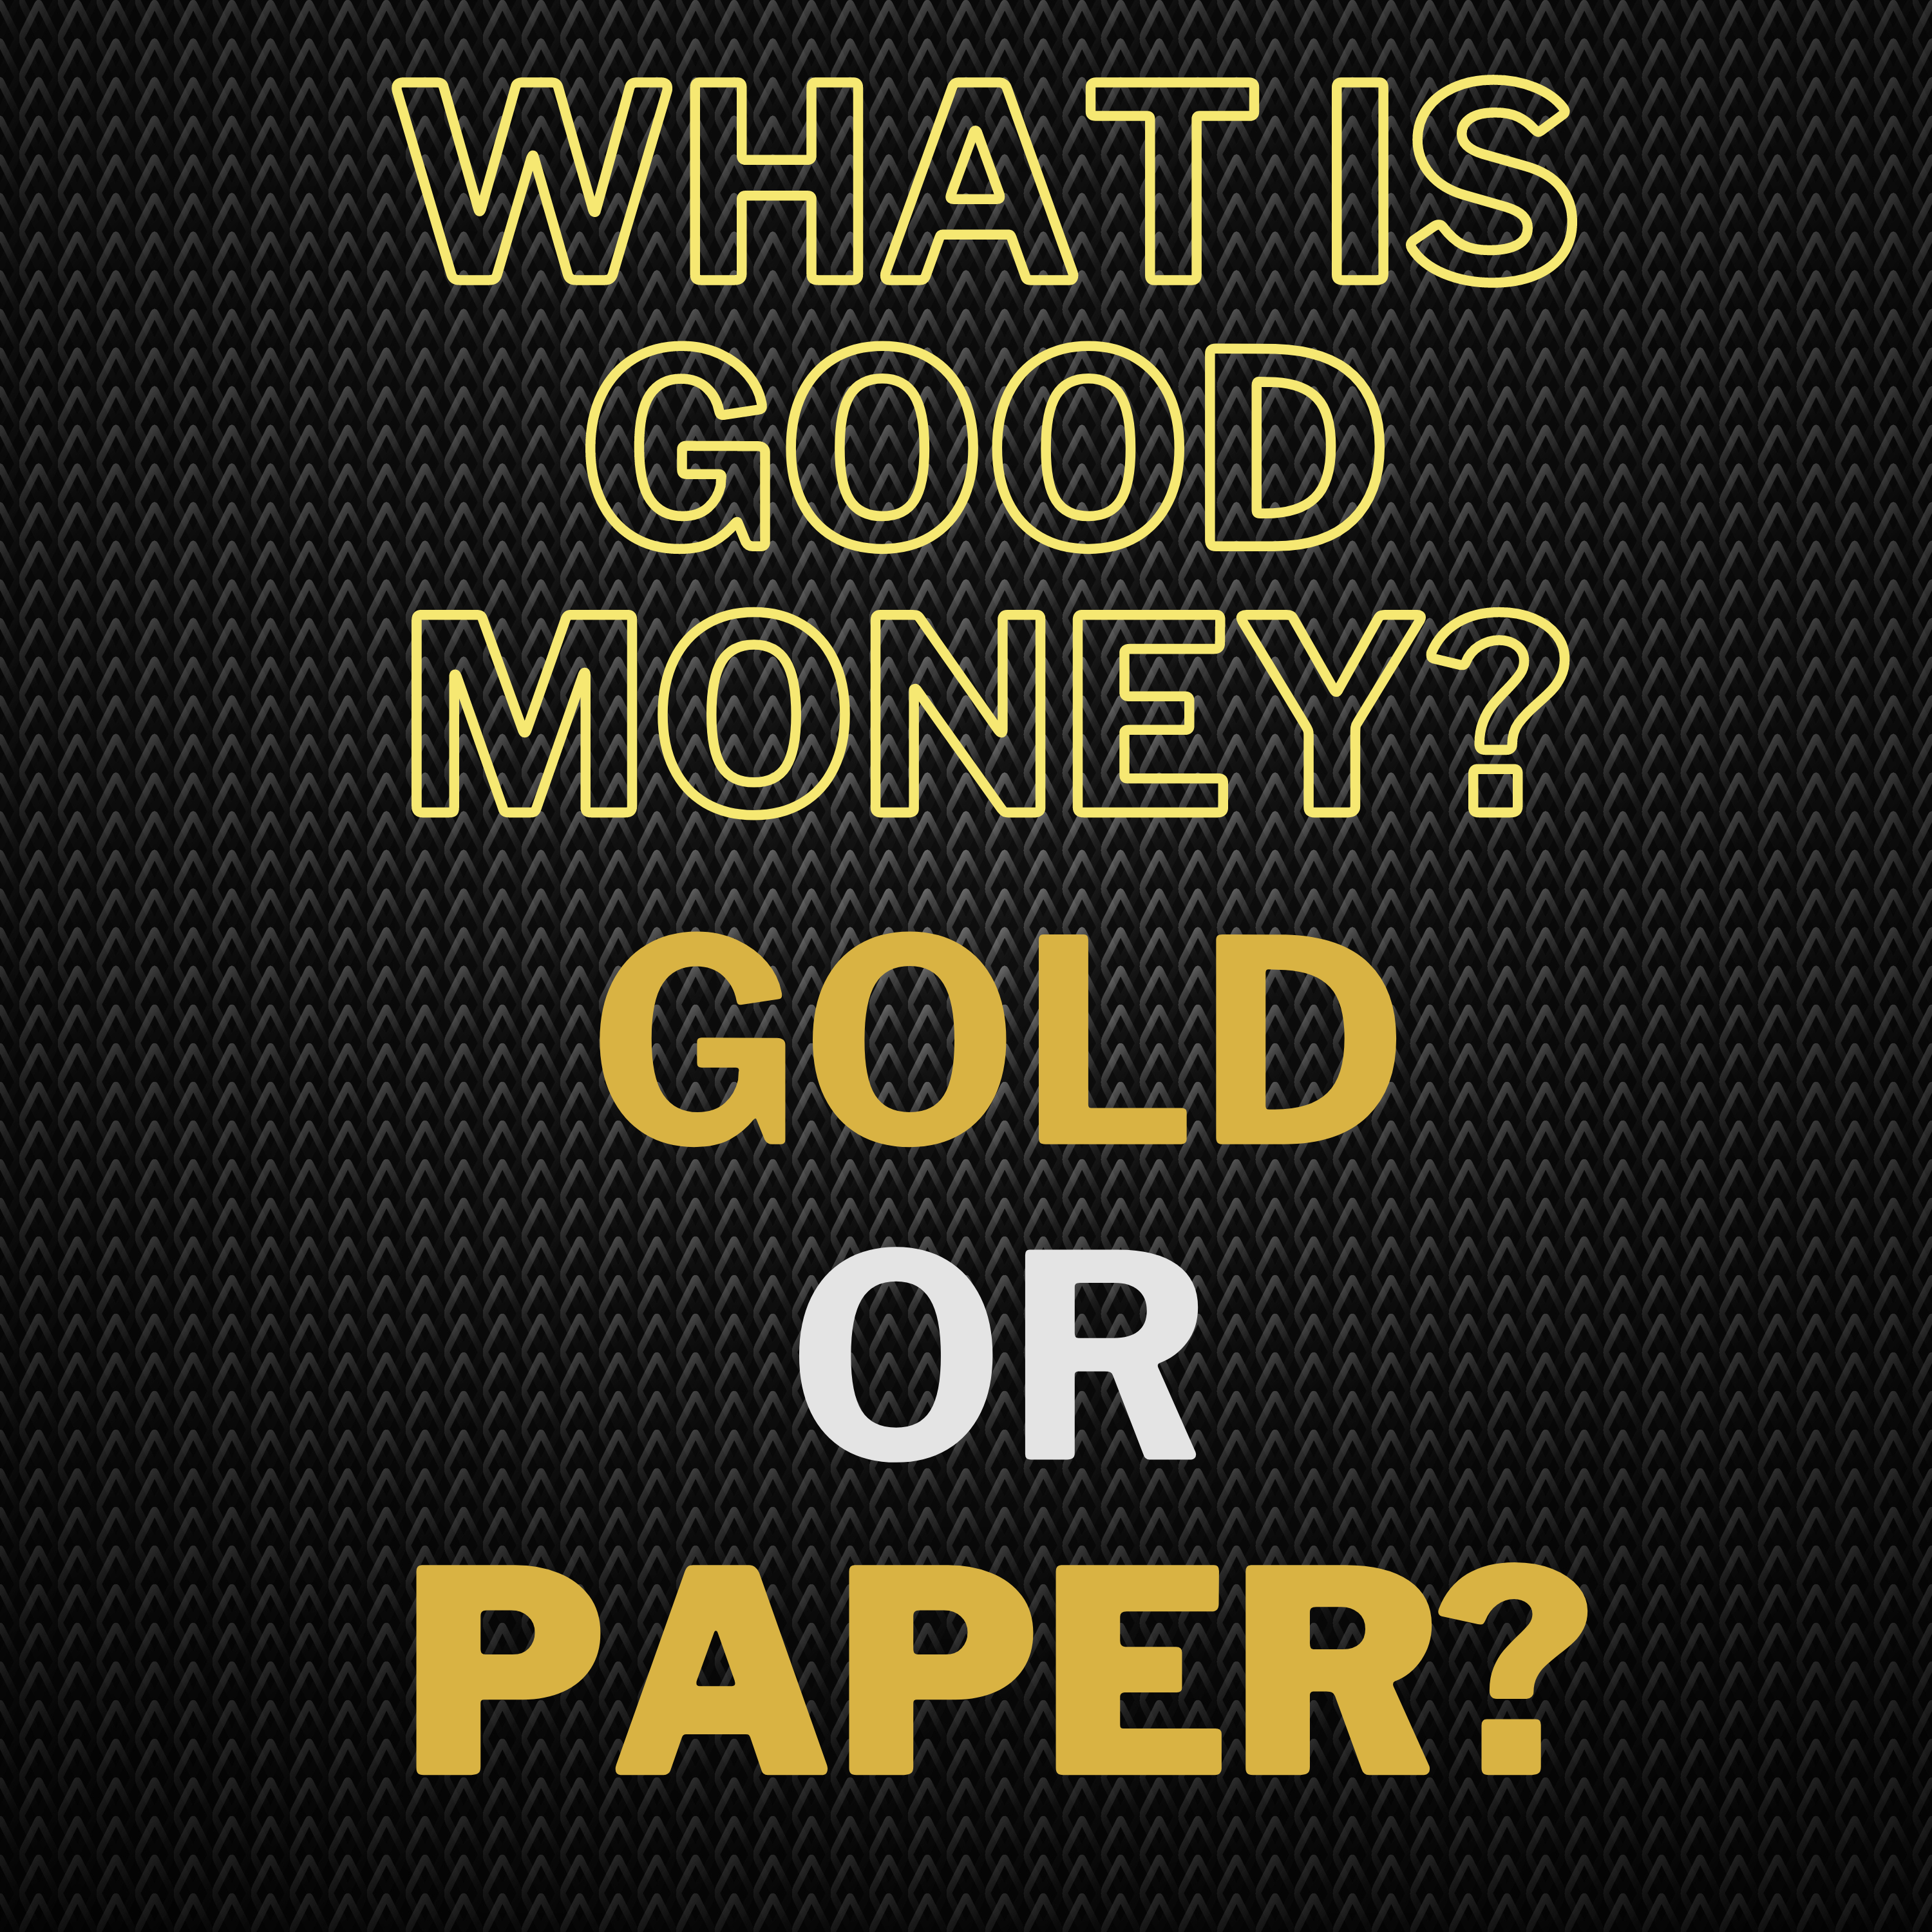 Jeff Deist: What is good money?